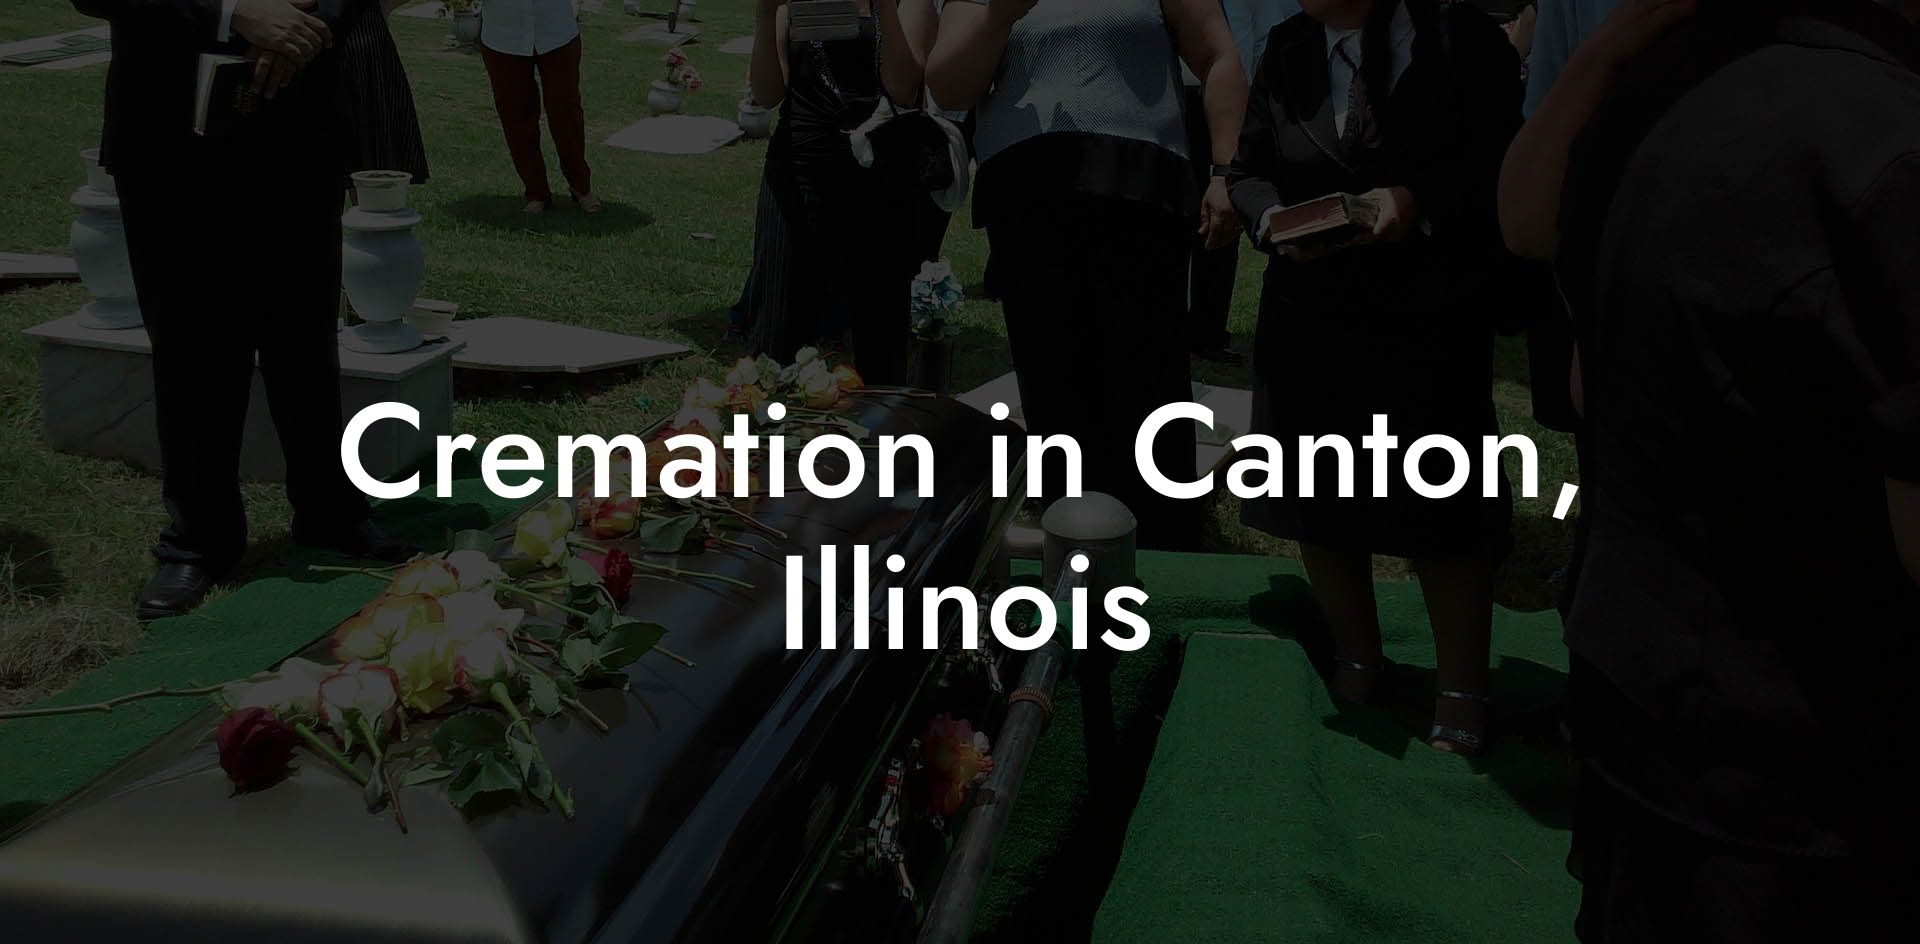 Cremation in Canton, Illinois